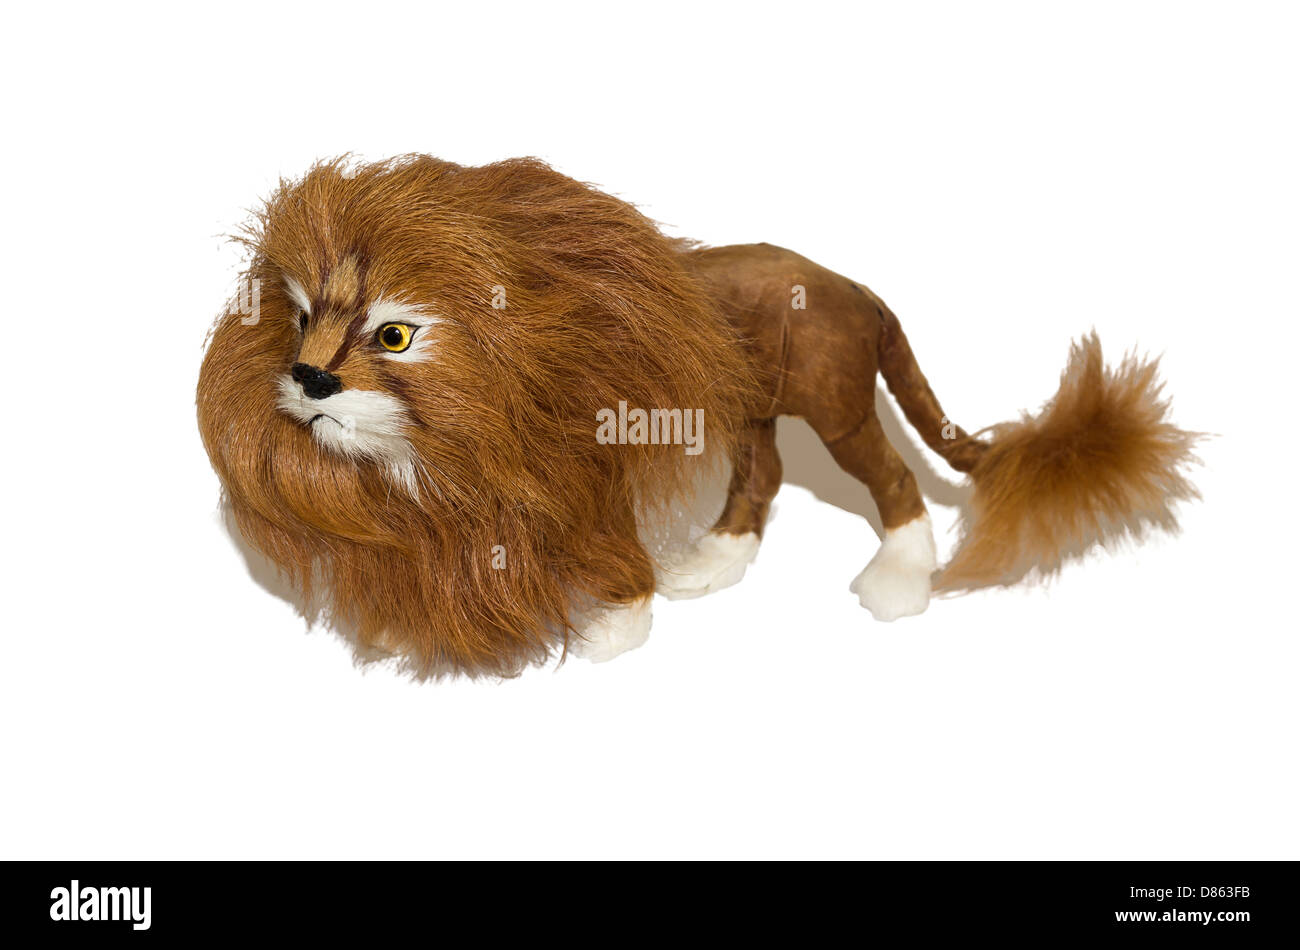 Lion king of beasts, Isolated, illustration Stock Photo